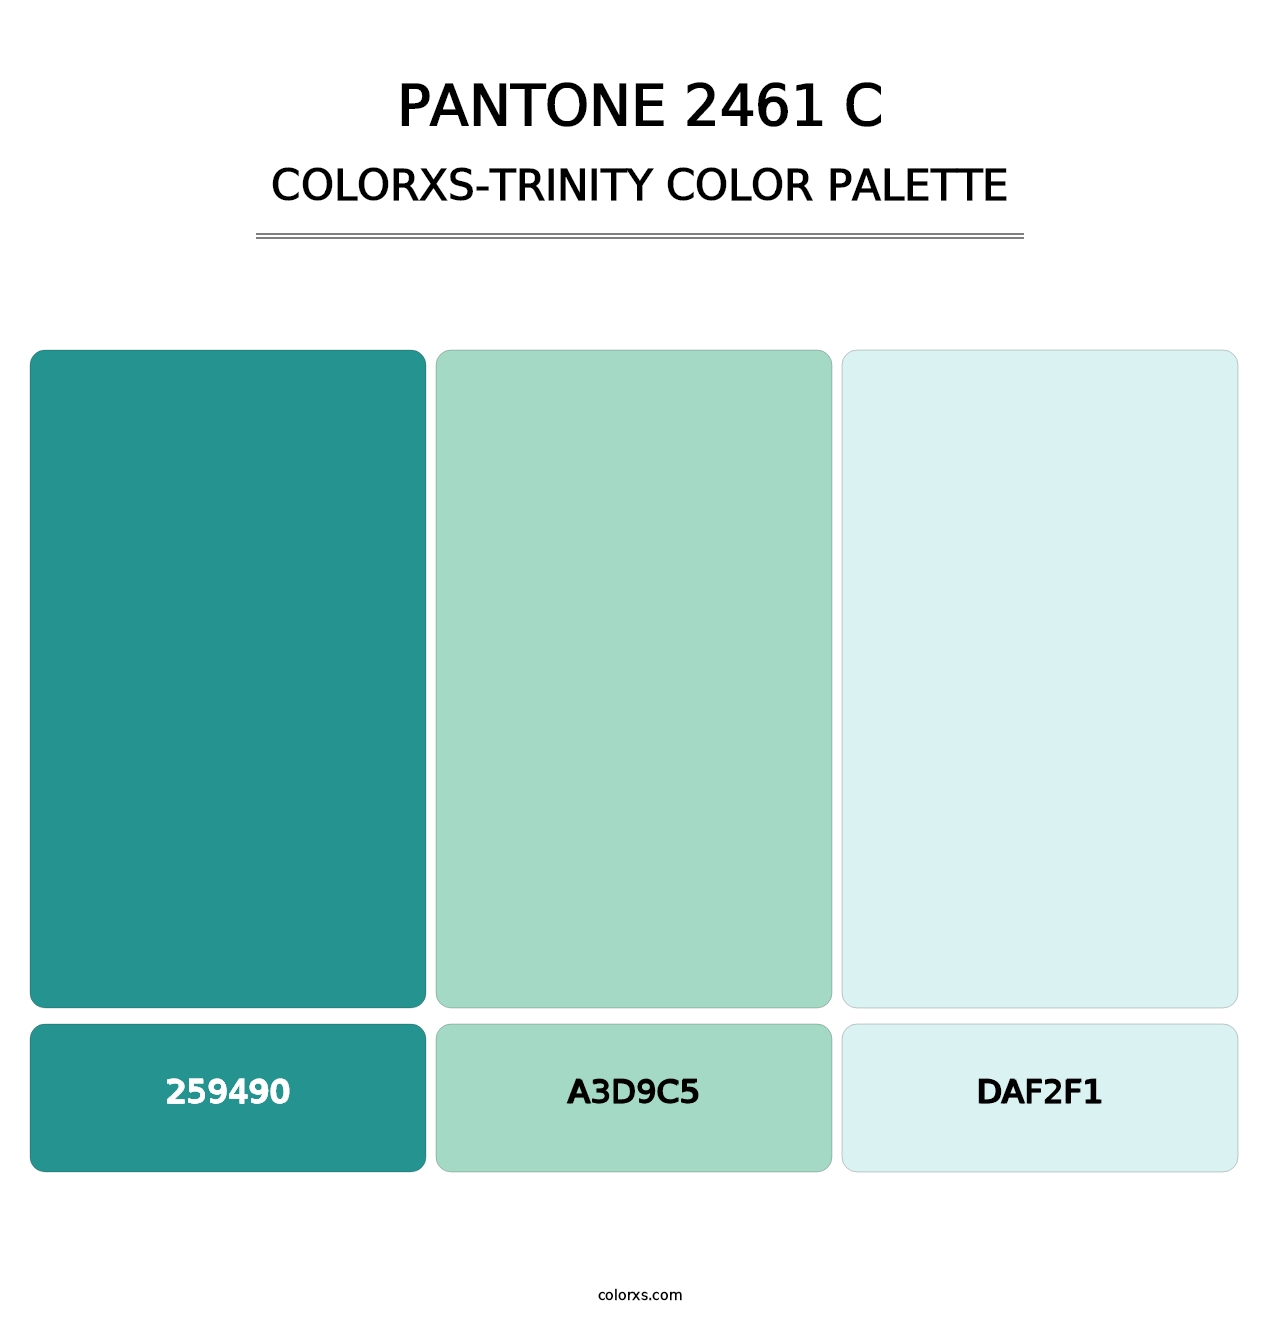 PANTONE 2461 C - Colorxs Trinity Palette